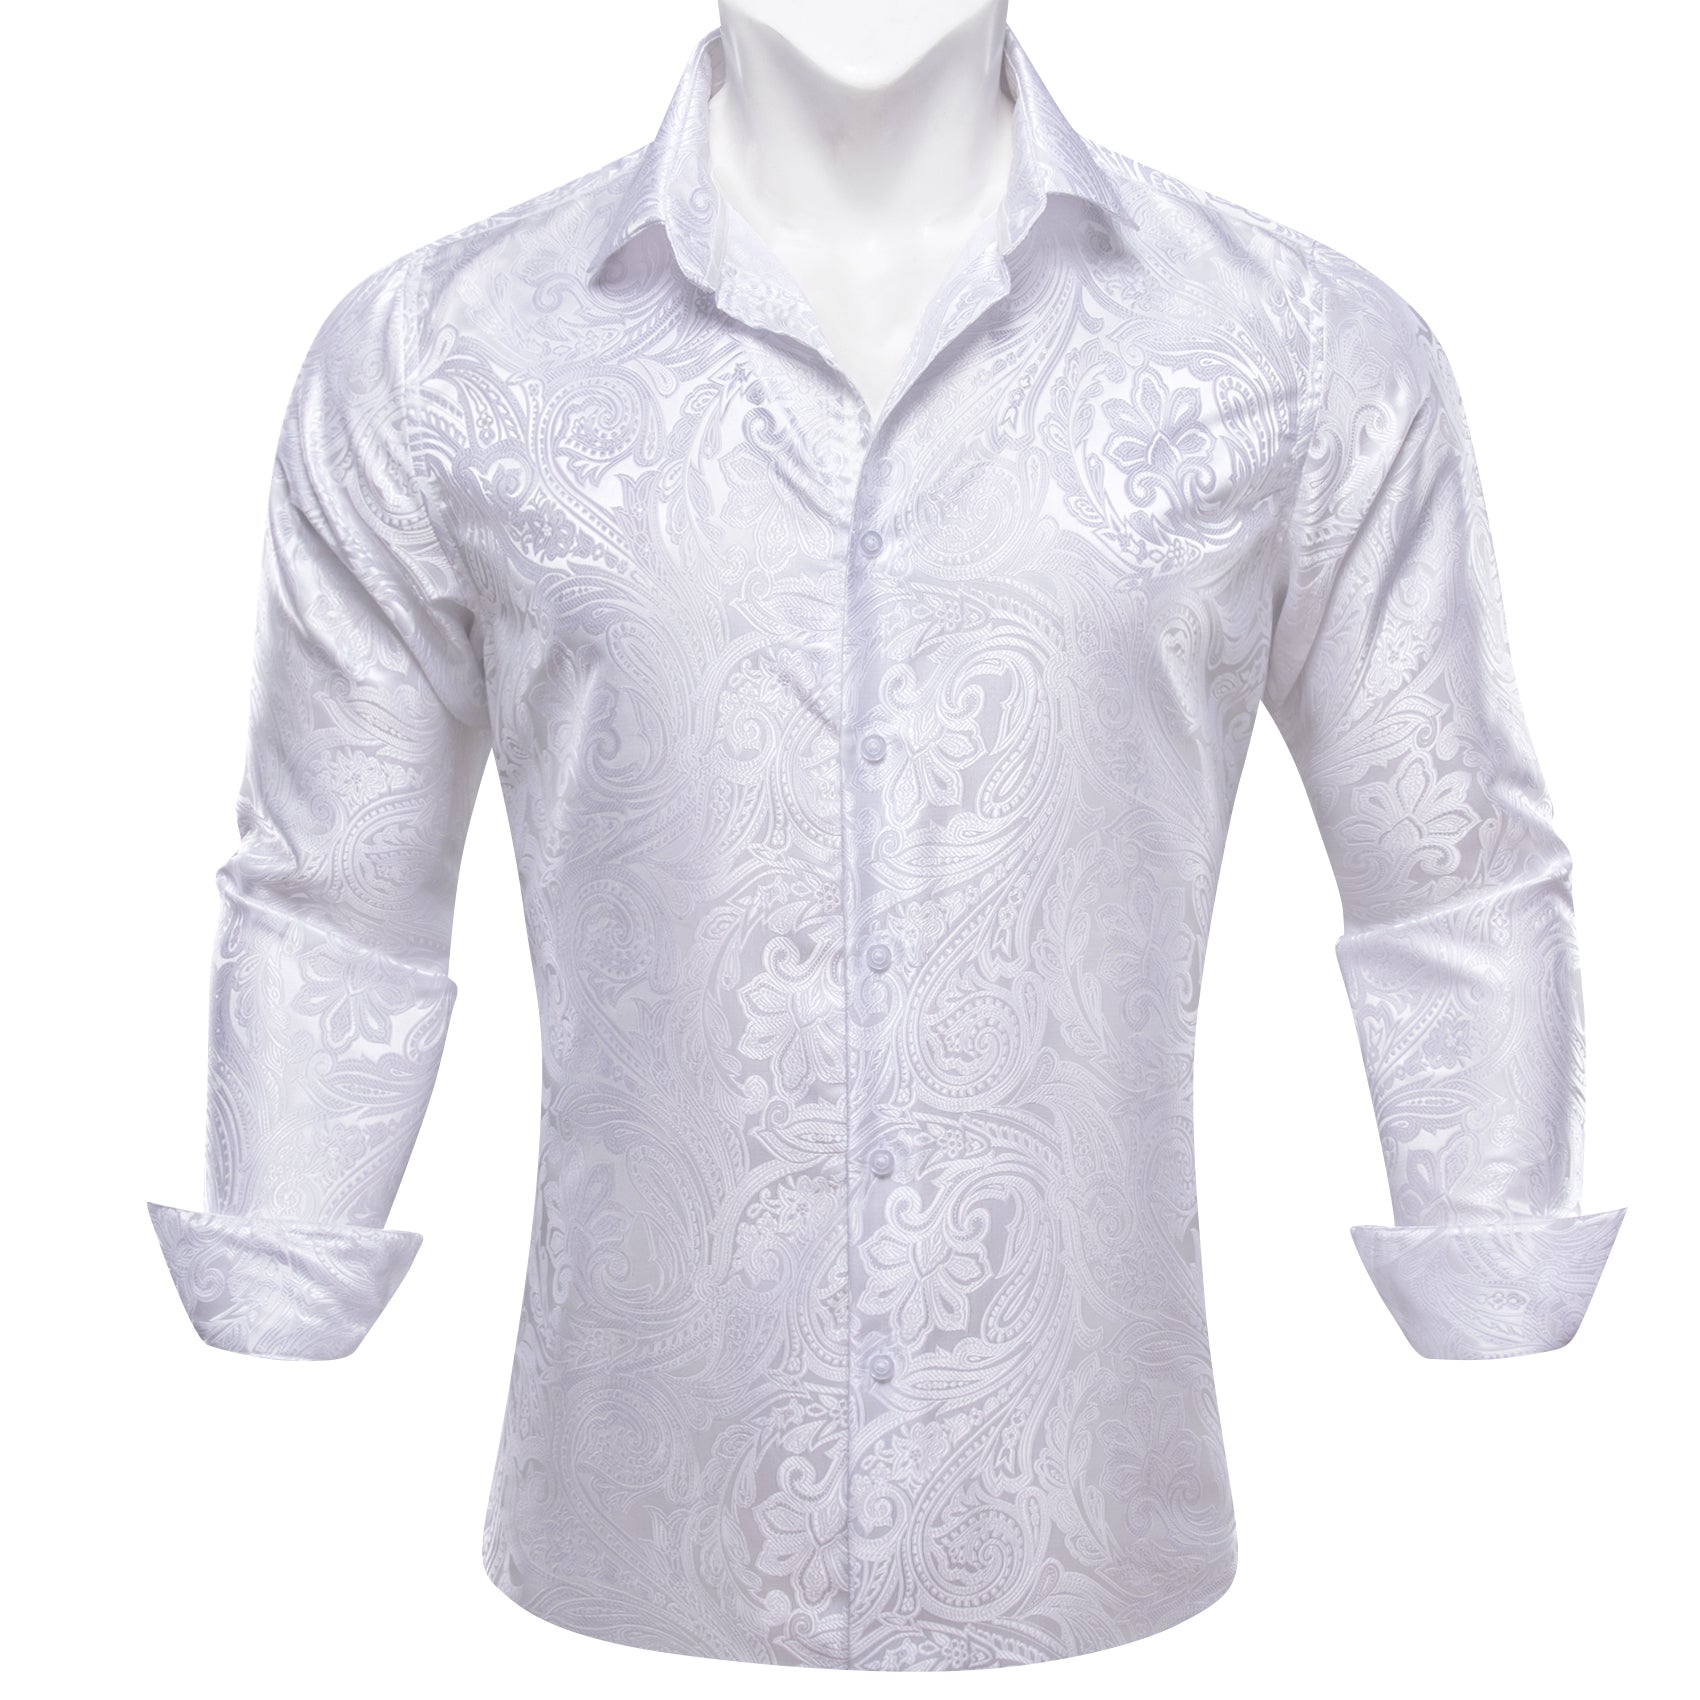 Barry.wang Classy White Paisley Silk Men's Shirt